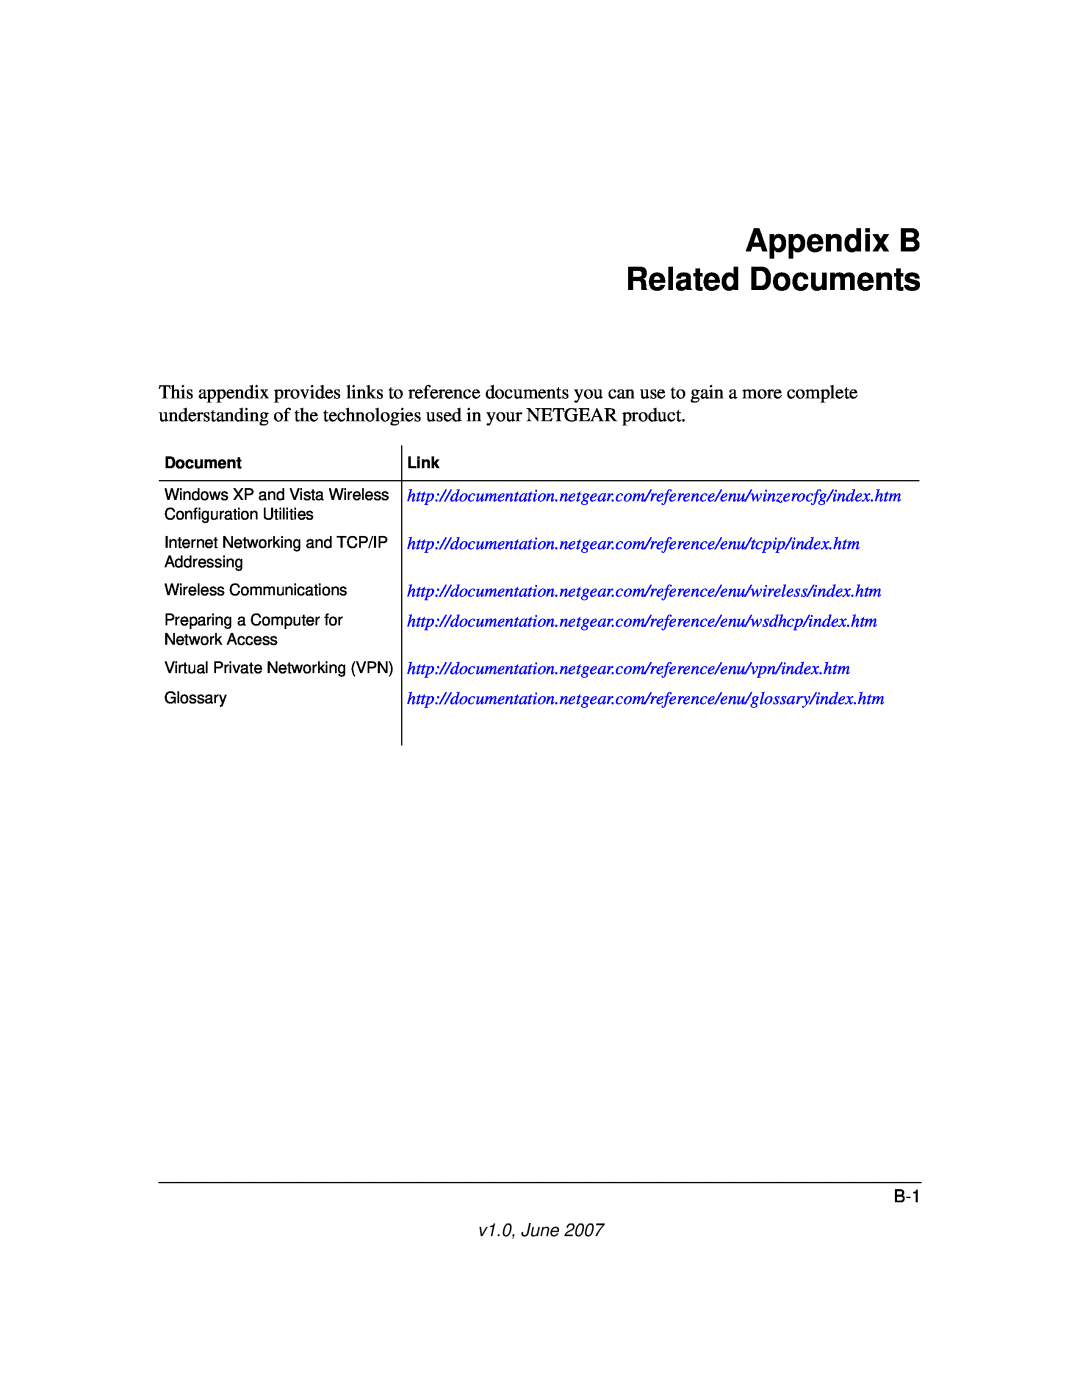 NETGEAR CG814WG V3 manual Appendix B Related Documents, v1.0, June 